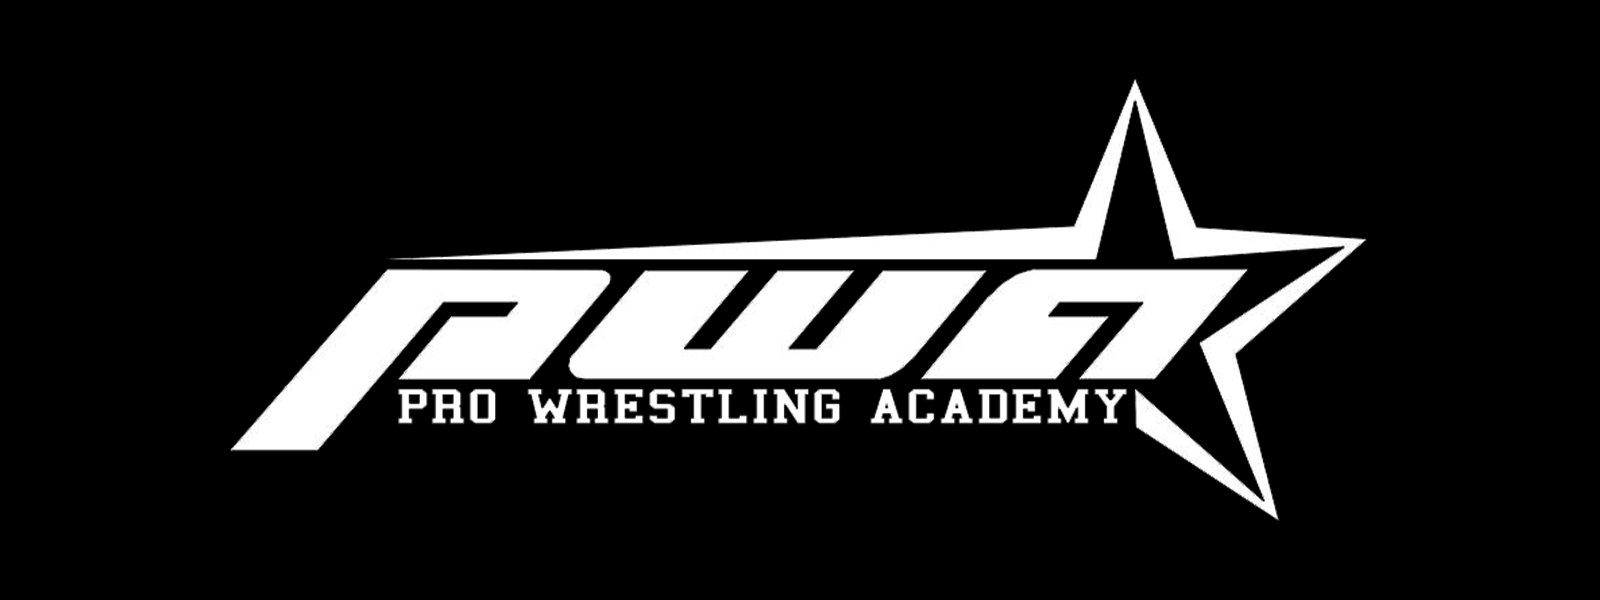 Pro Wrestling Academy